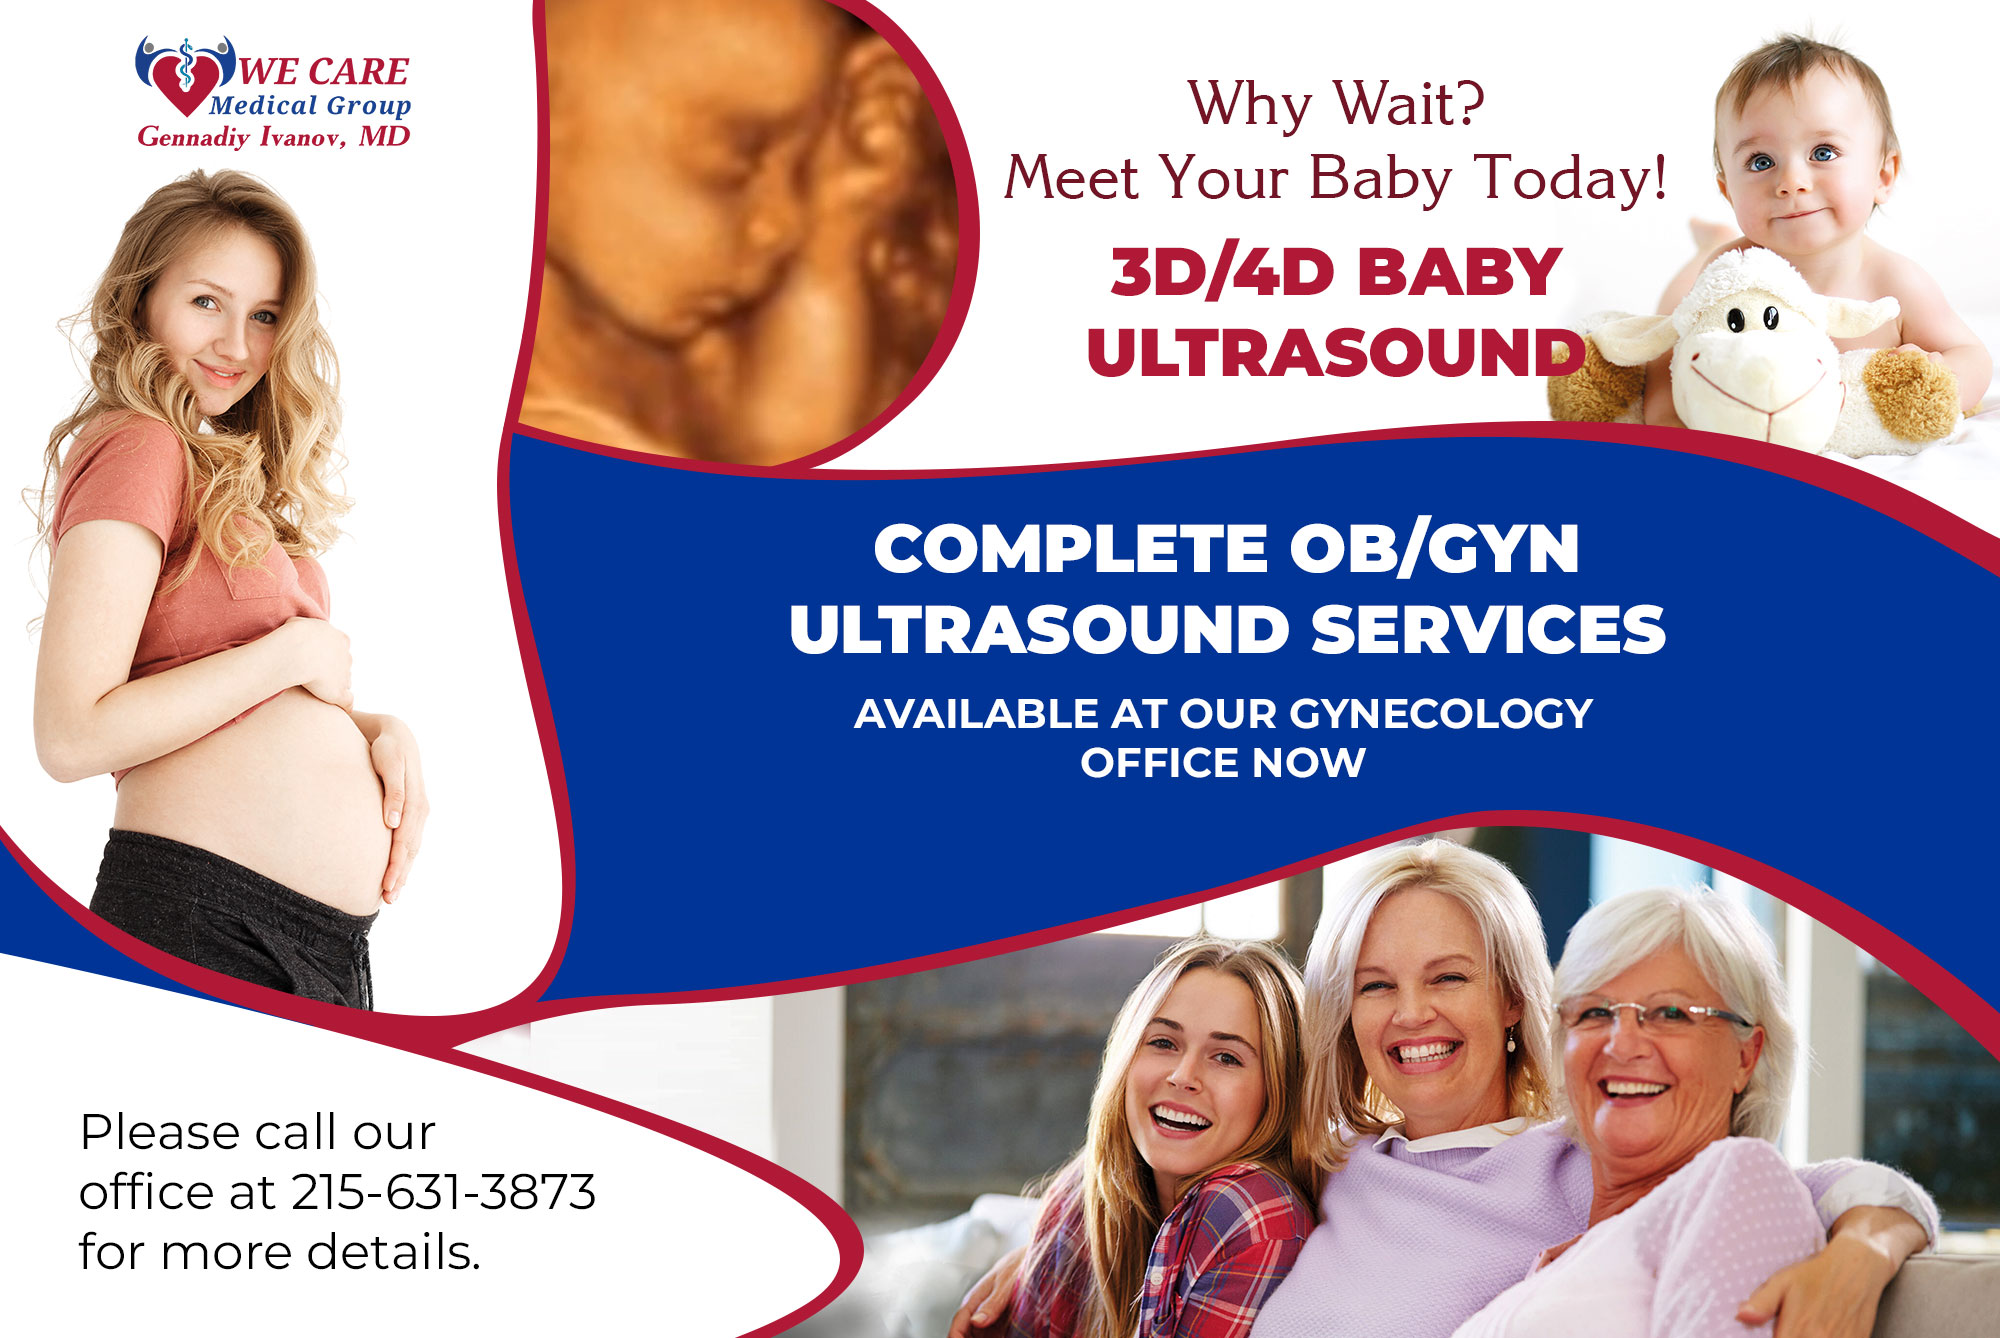 OB/GYN Ultrasound services in Bucks County near me